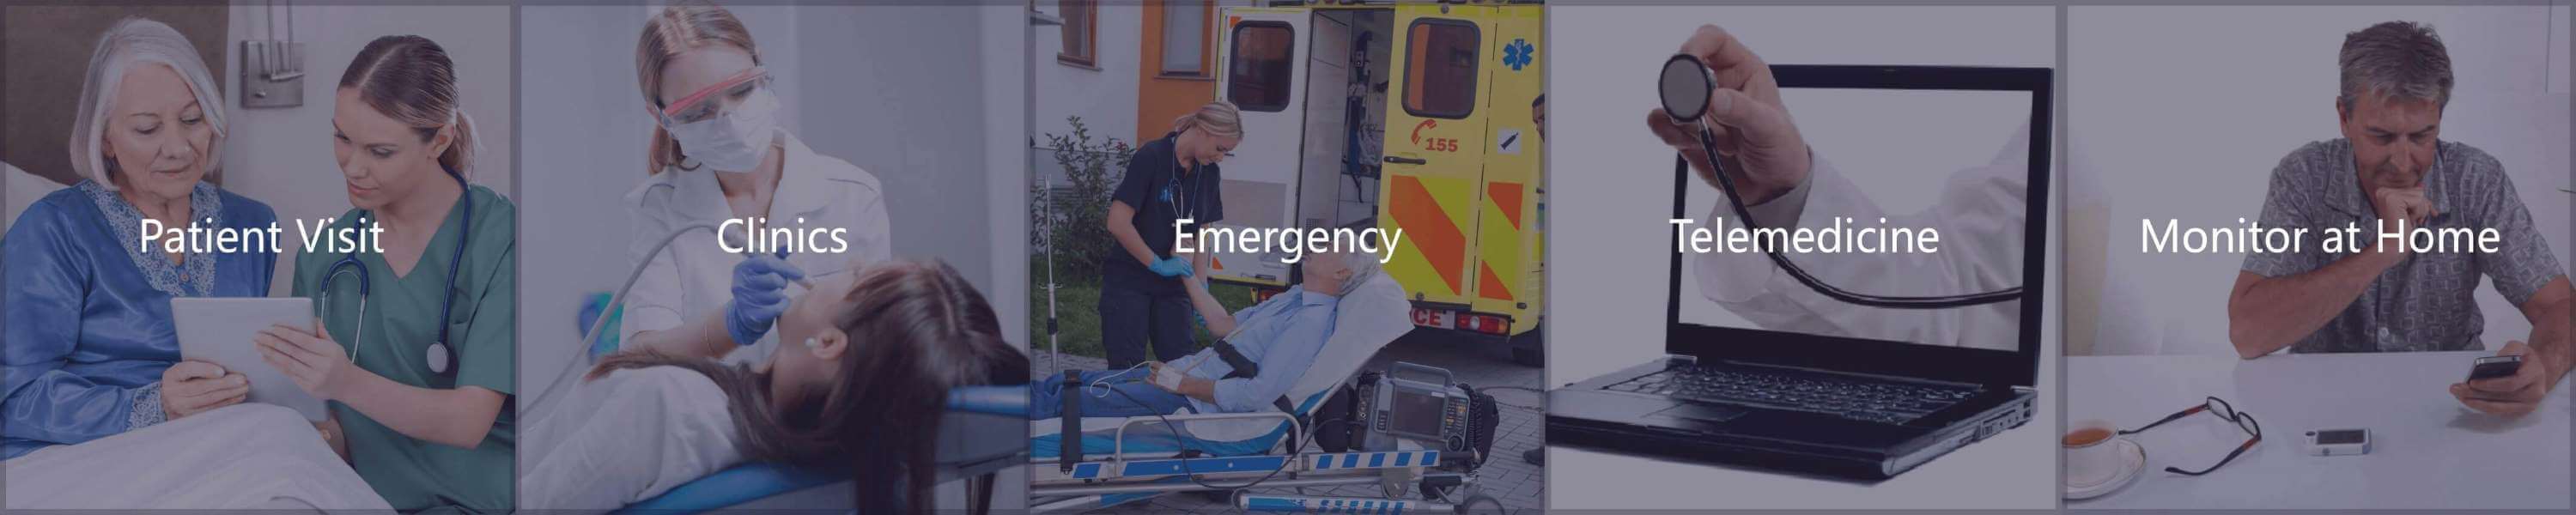 emergency, telemedical